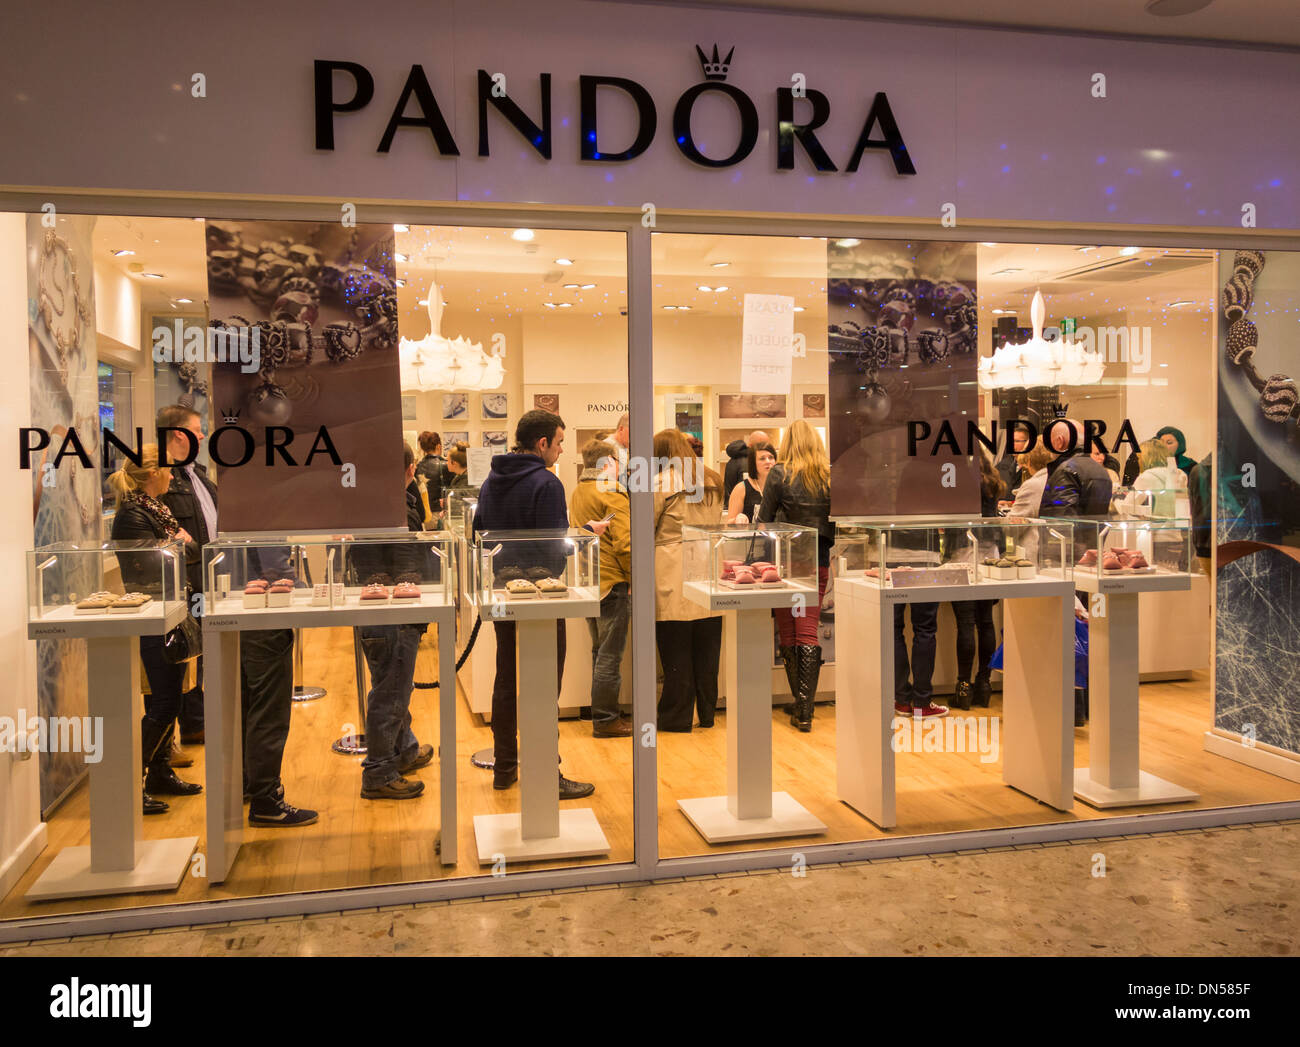 People queuing in Pandora shop at Christmas. UK Stock Photo - Alamy